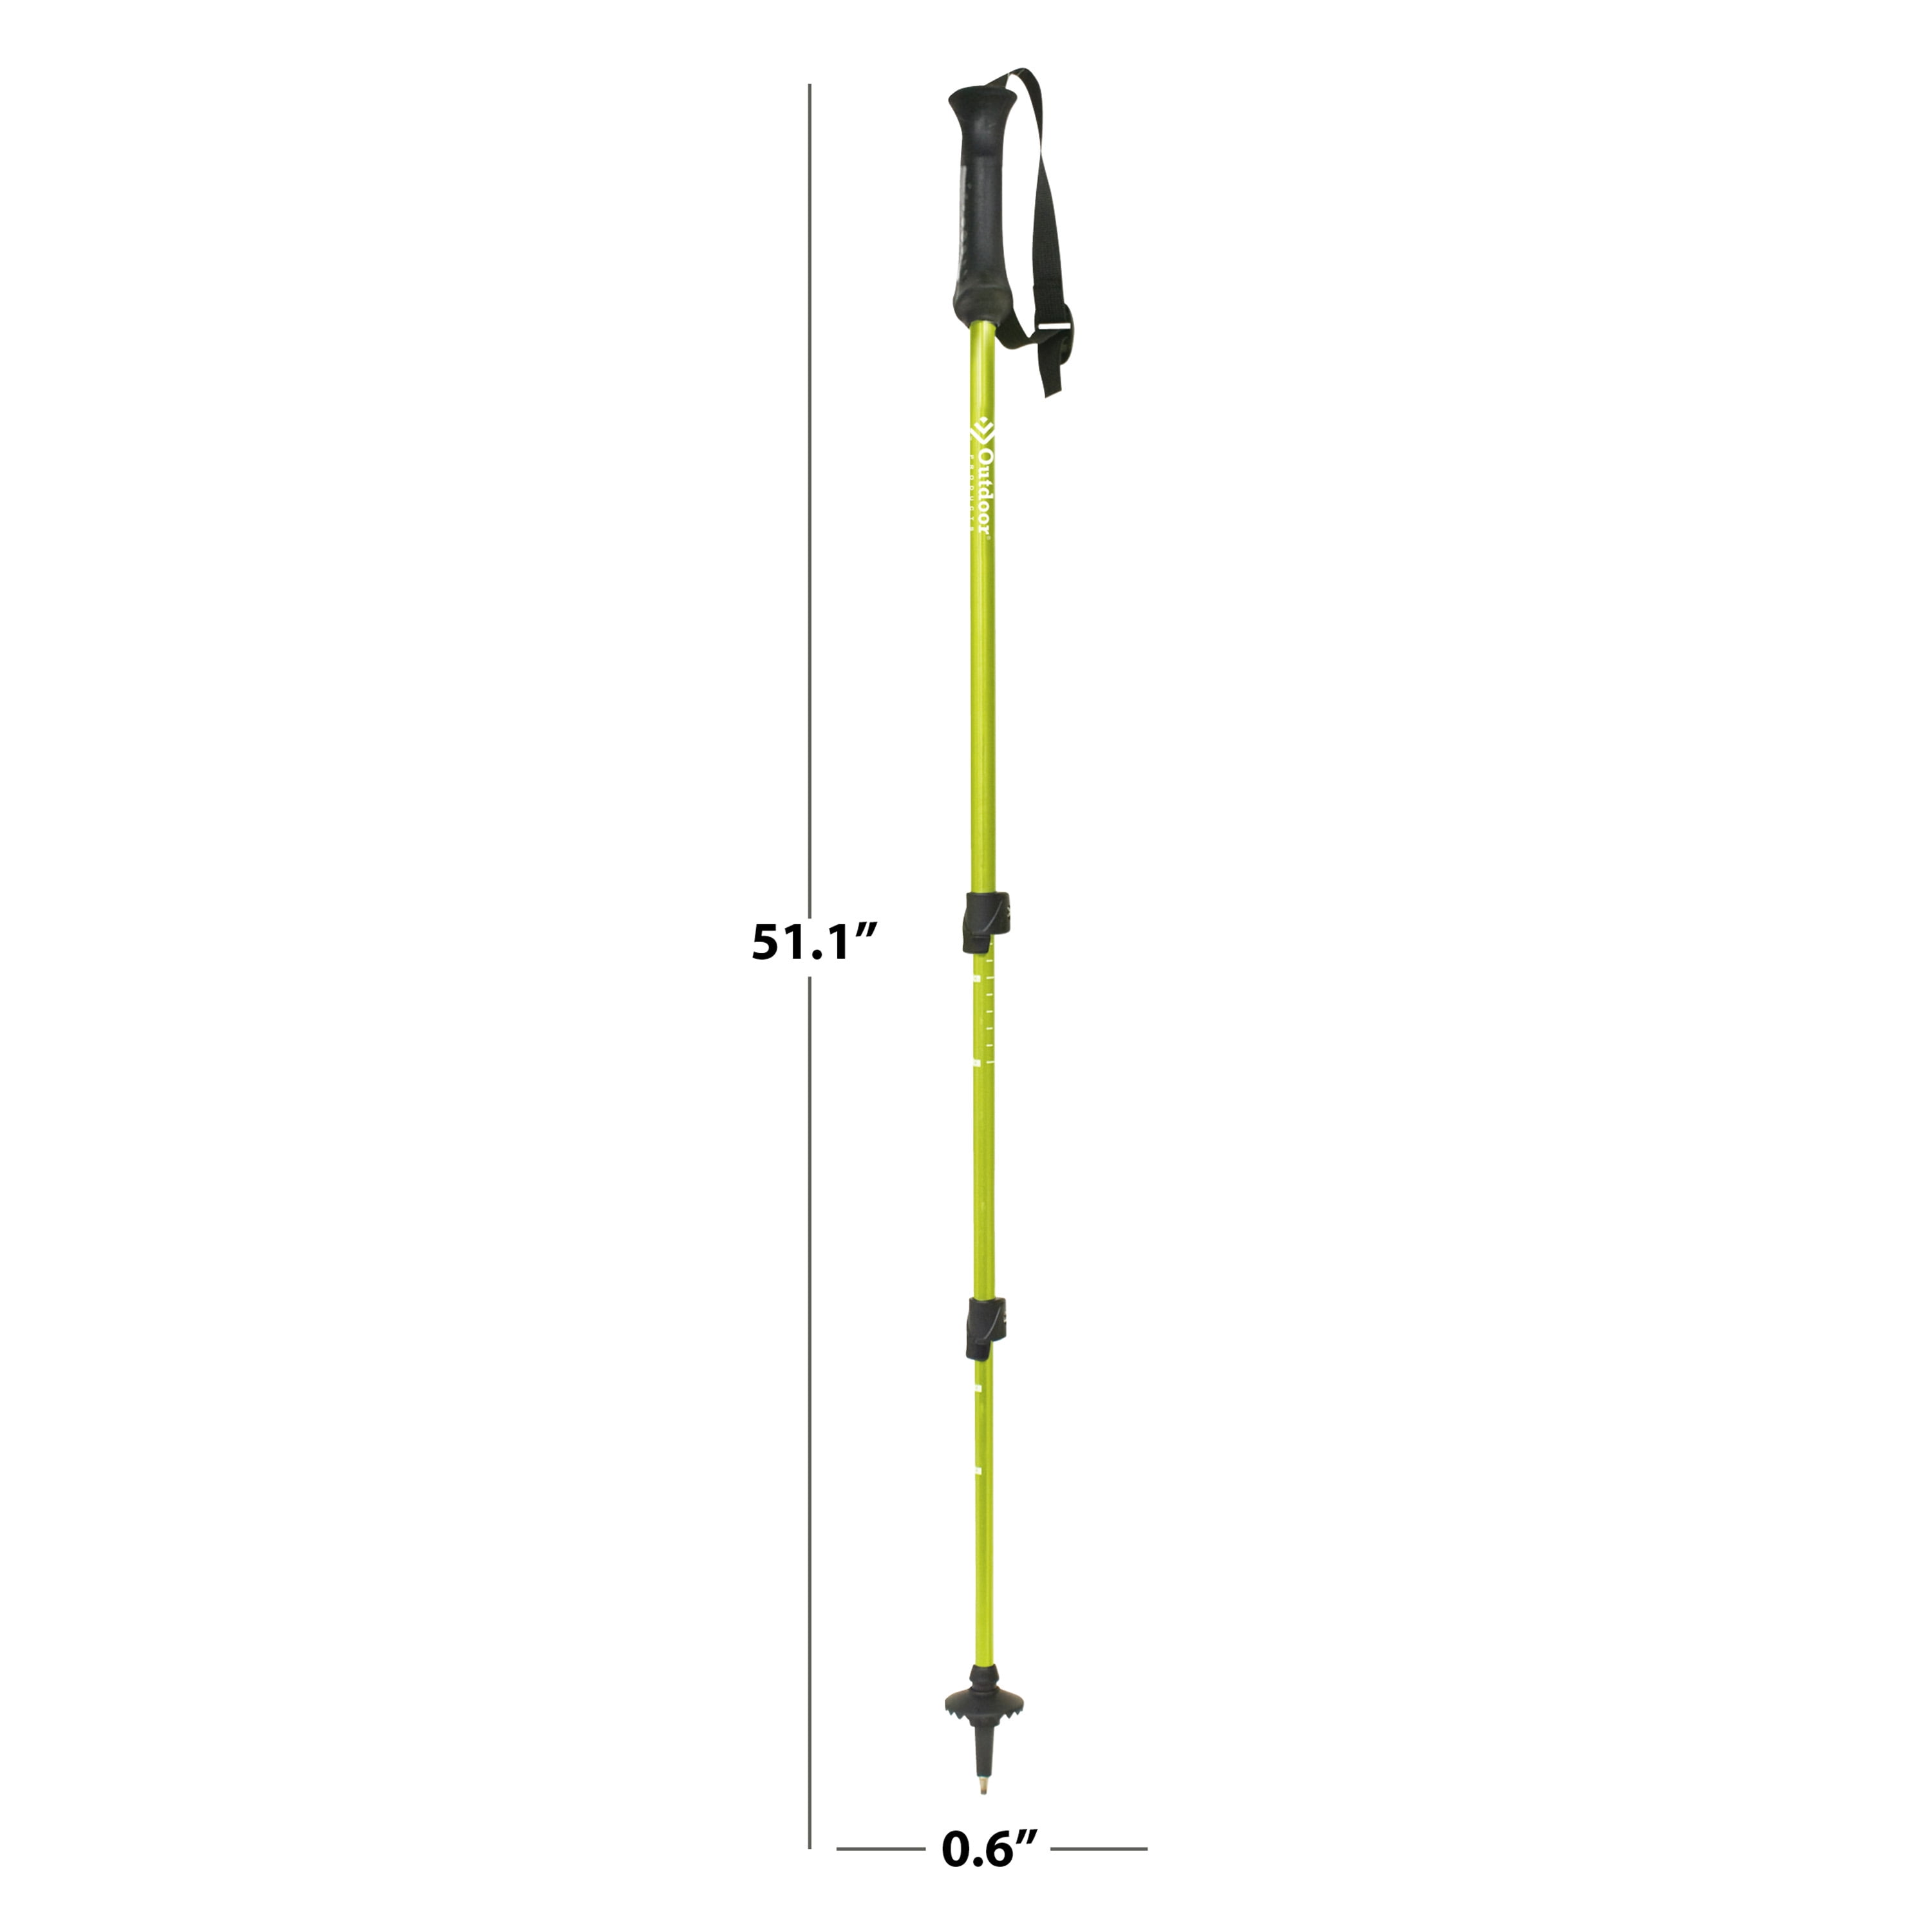 Outdoor Products Apex Trekking / Walking / Hiking Pole Set 